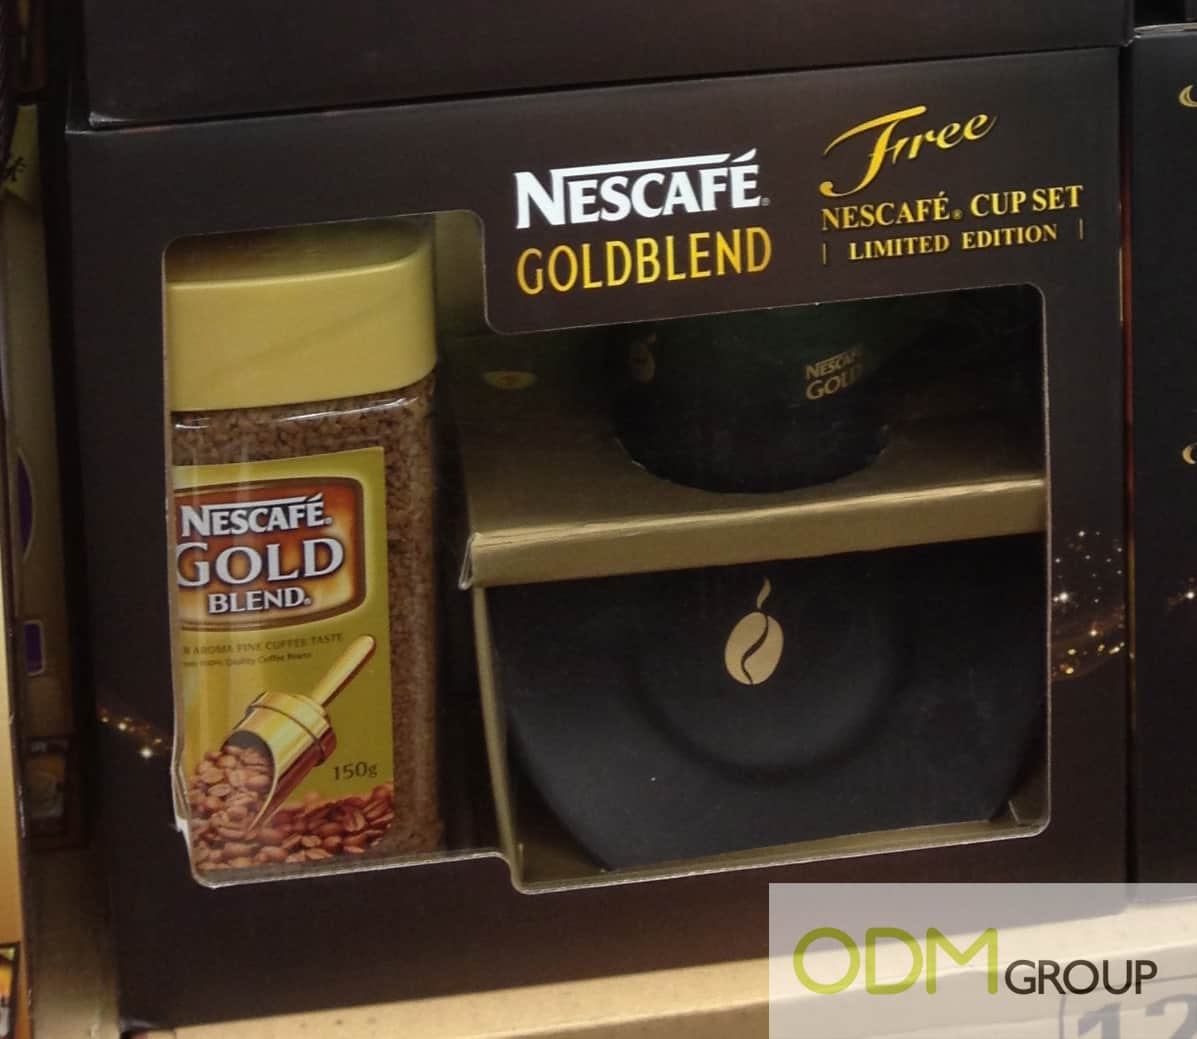 Nescafé Offers Classy Cup Set as In Store Marketing